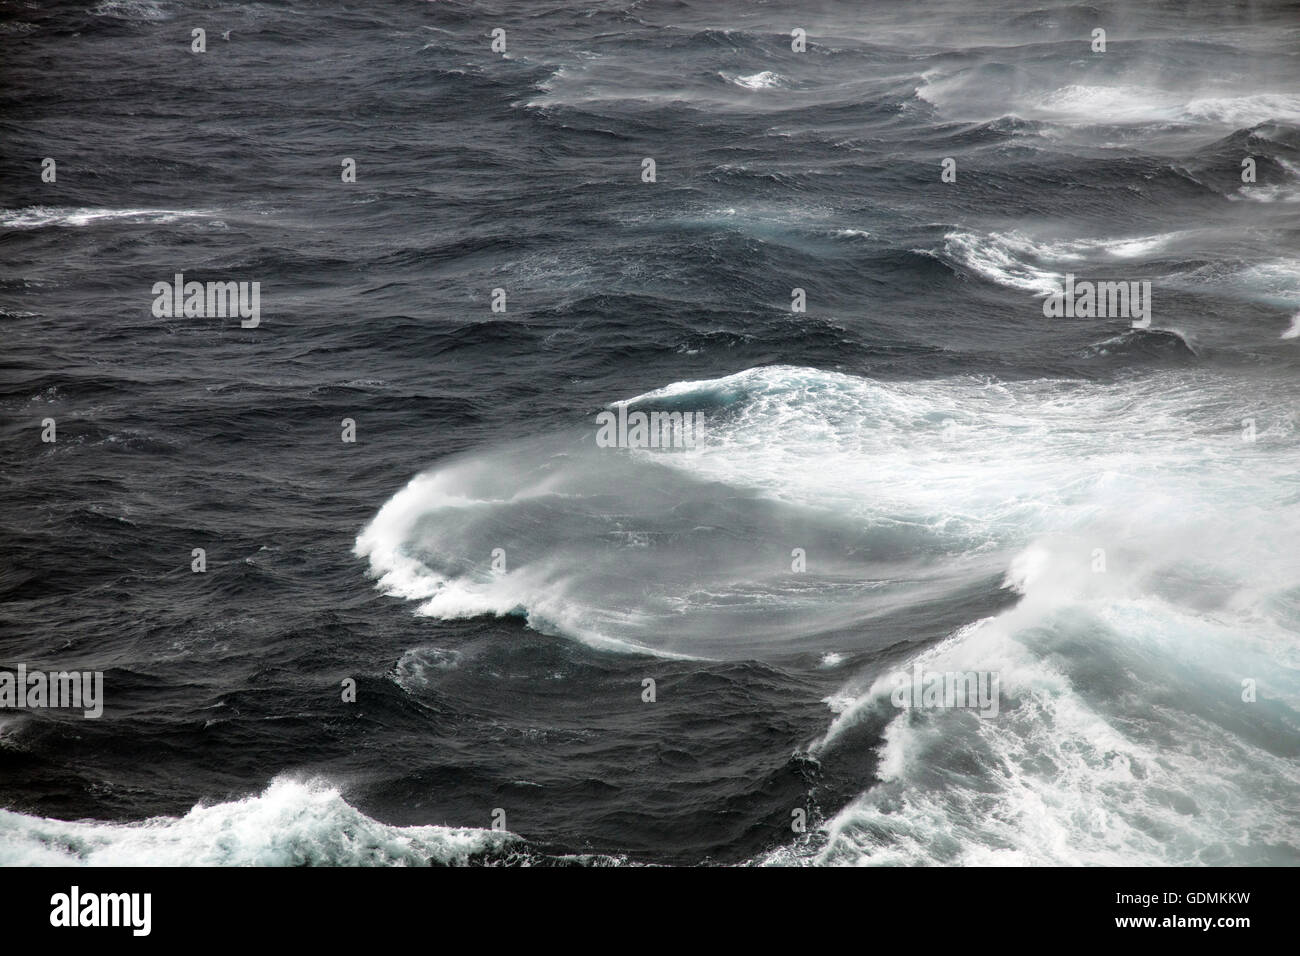 Rough stormy seas in the mid Atlantic Ocean Stock Photo